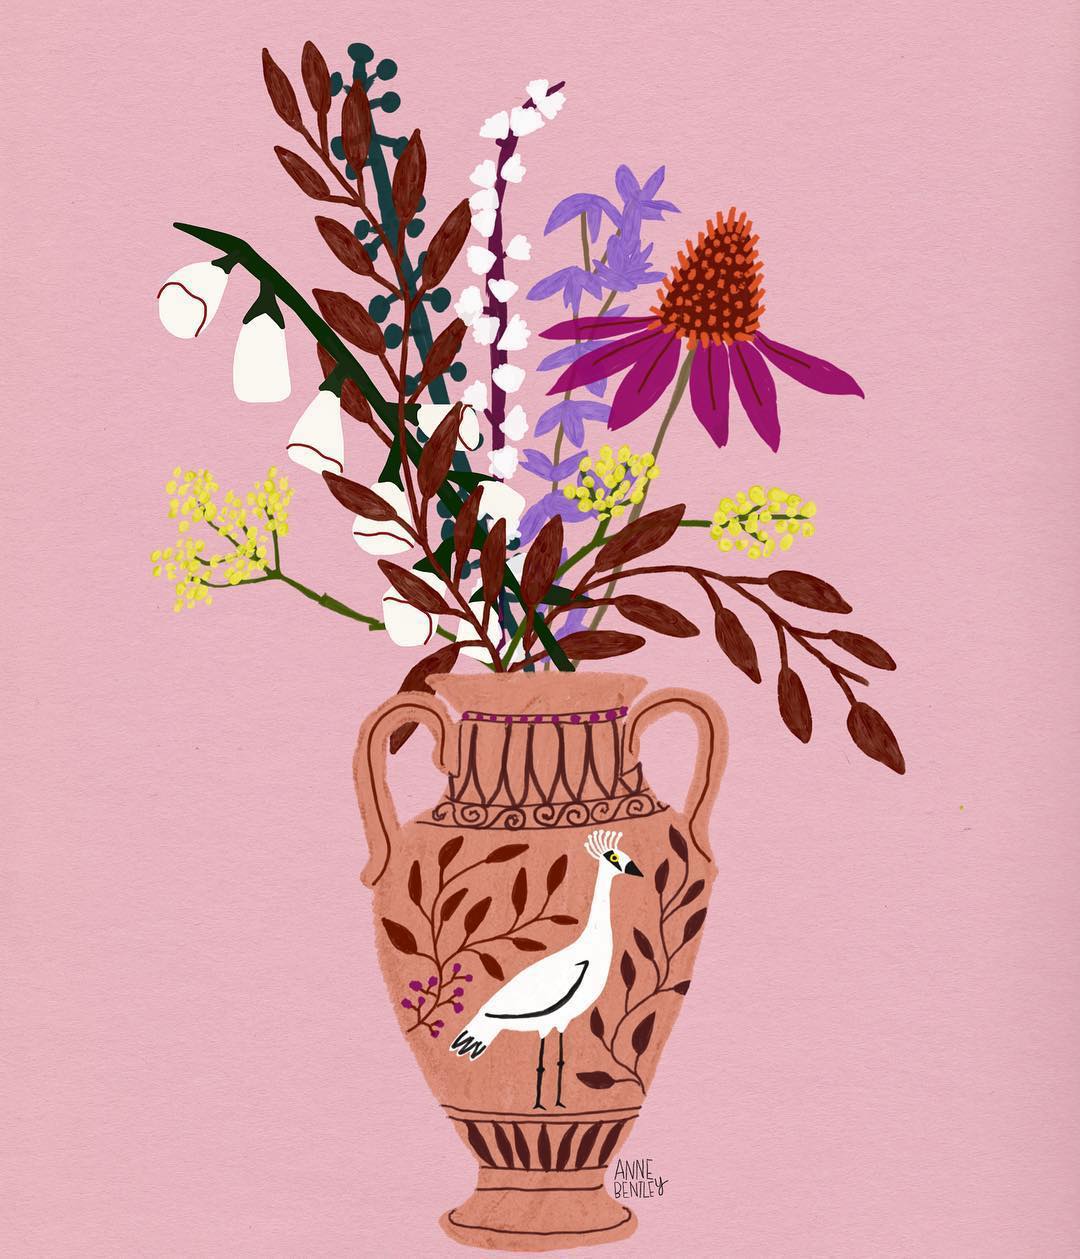 Illustration of vases